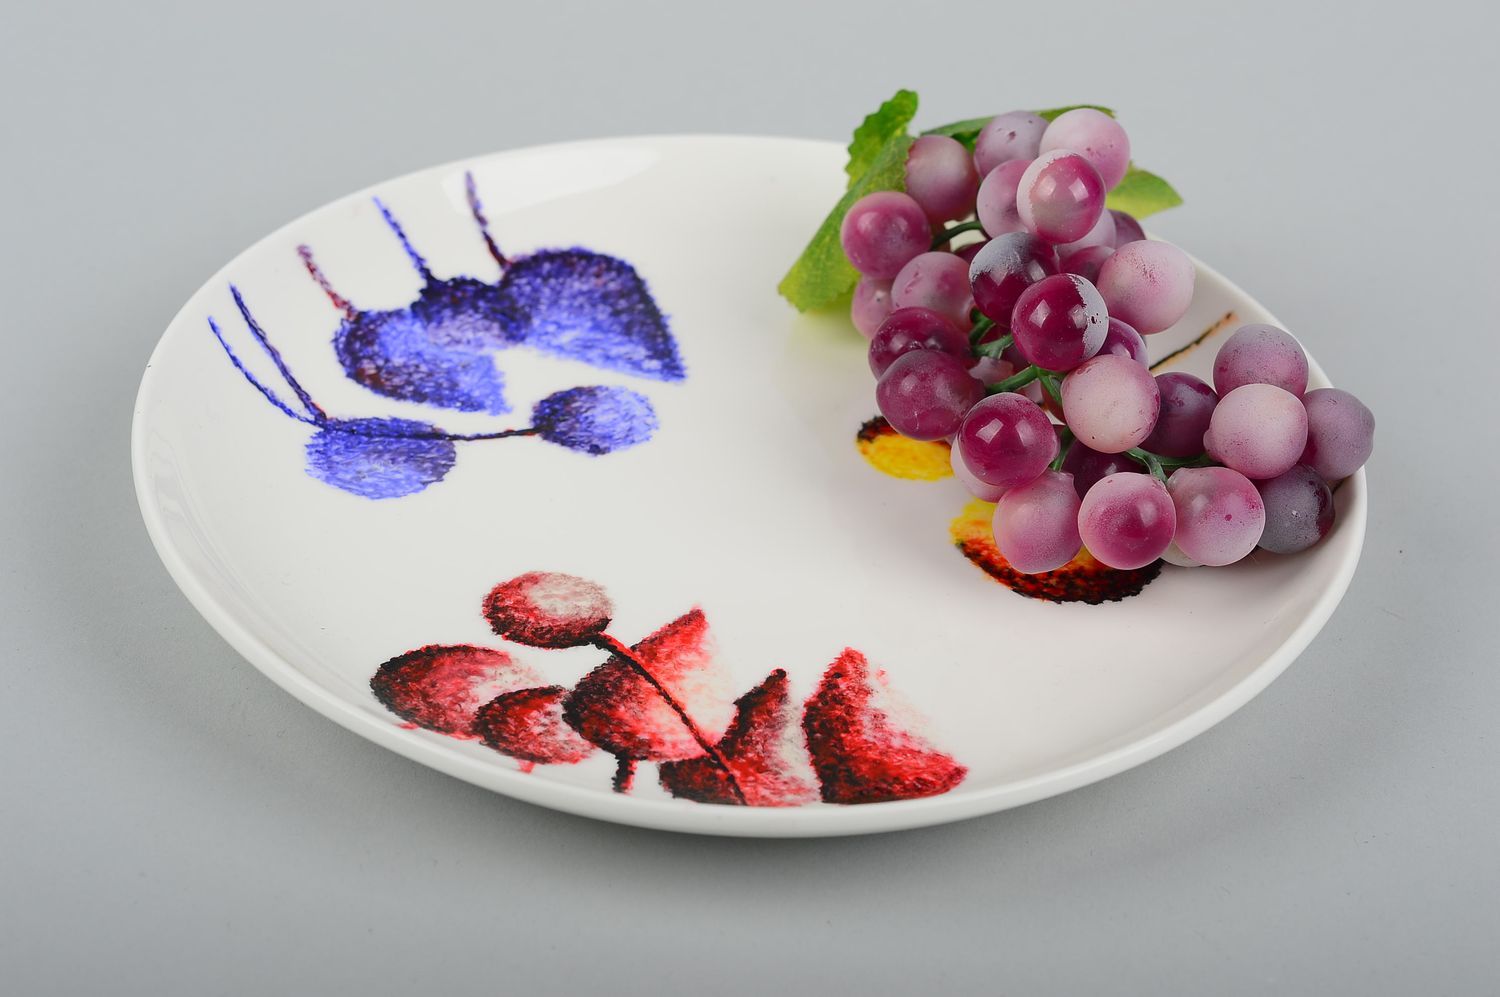 Handmade ceramic plate ornamented designer kitchenware painted unusual decor photo 1